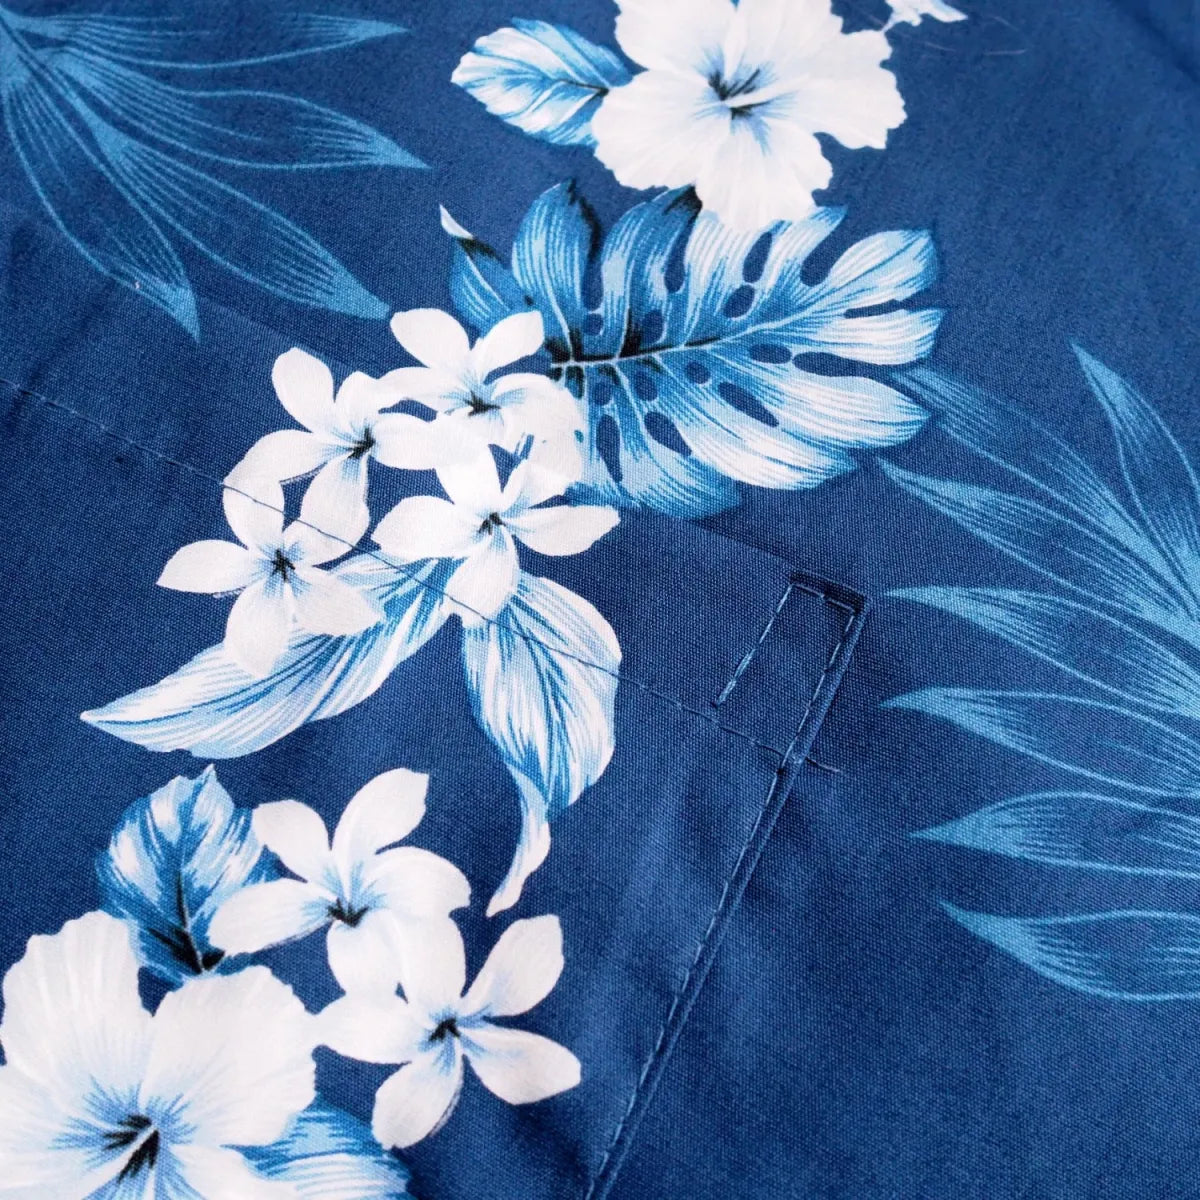 Hanalei blue hawaiian cotton shirt